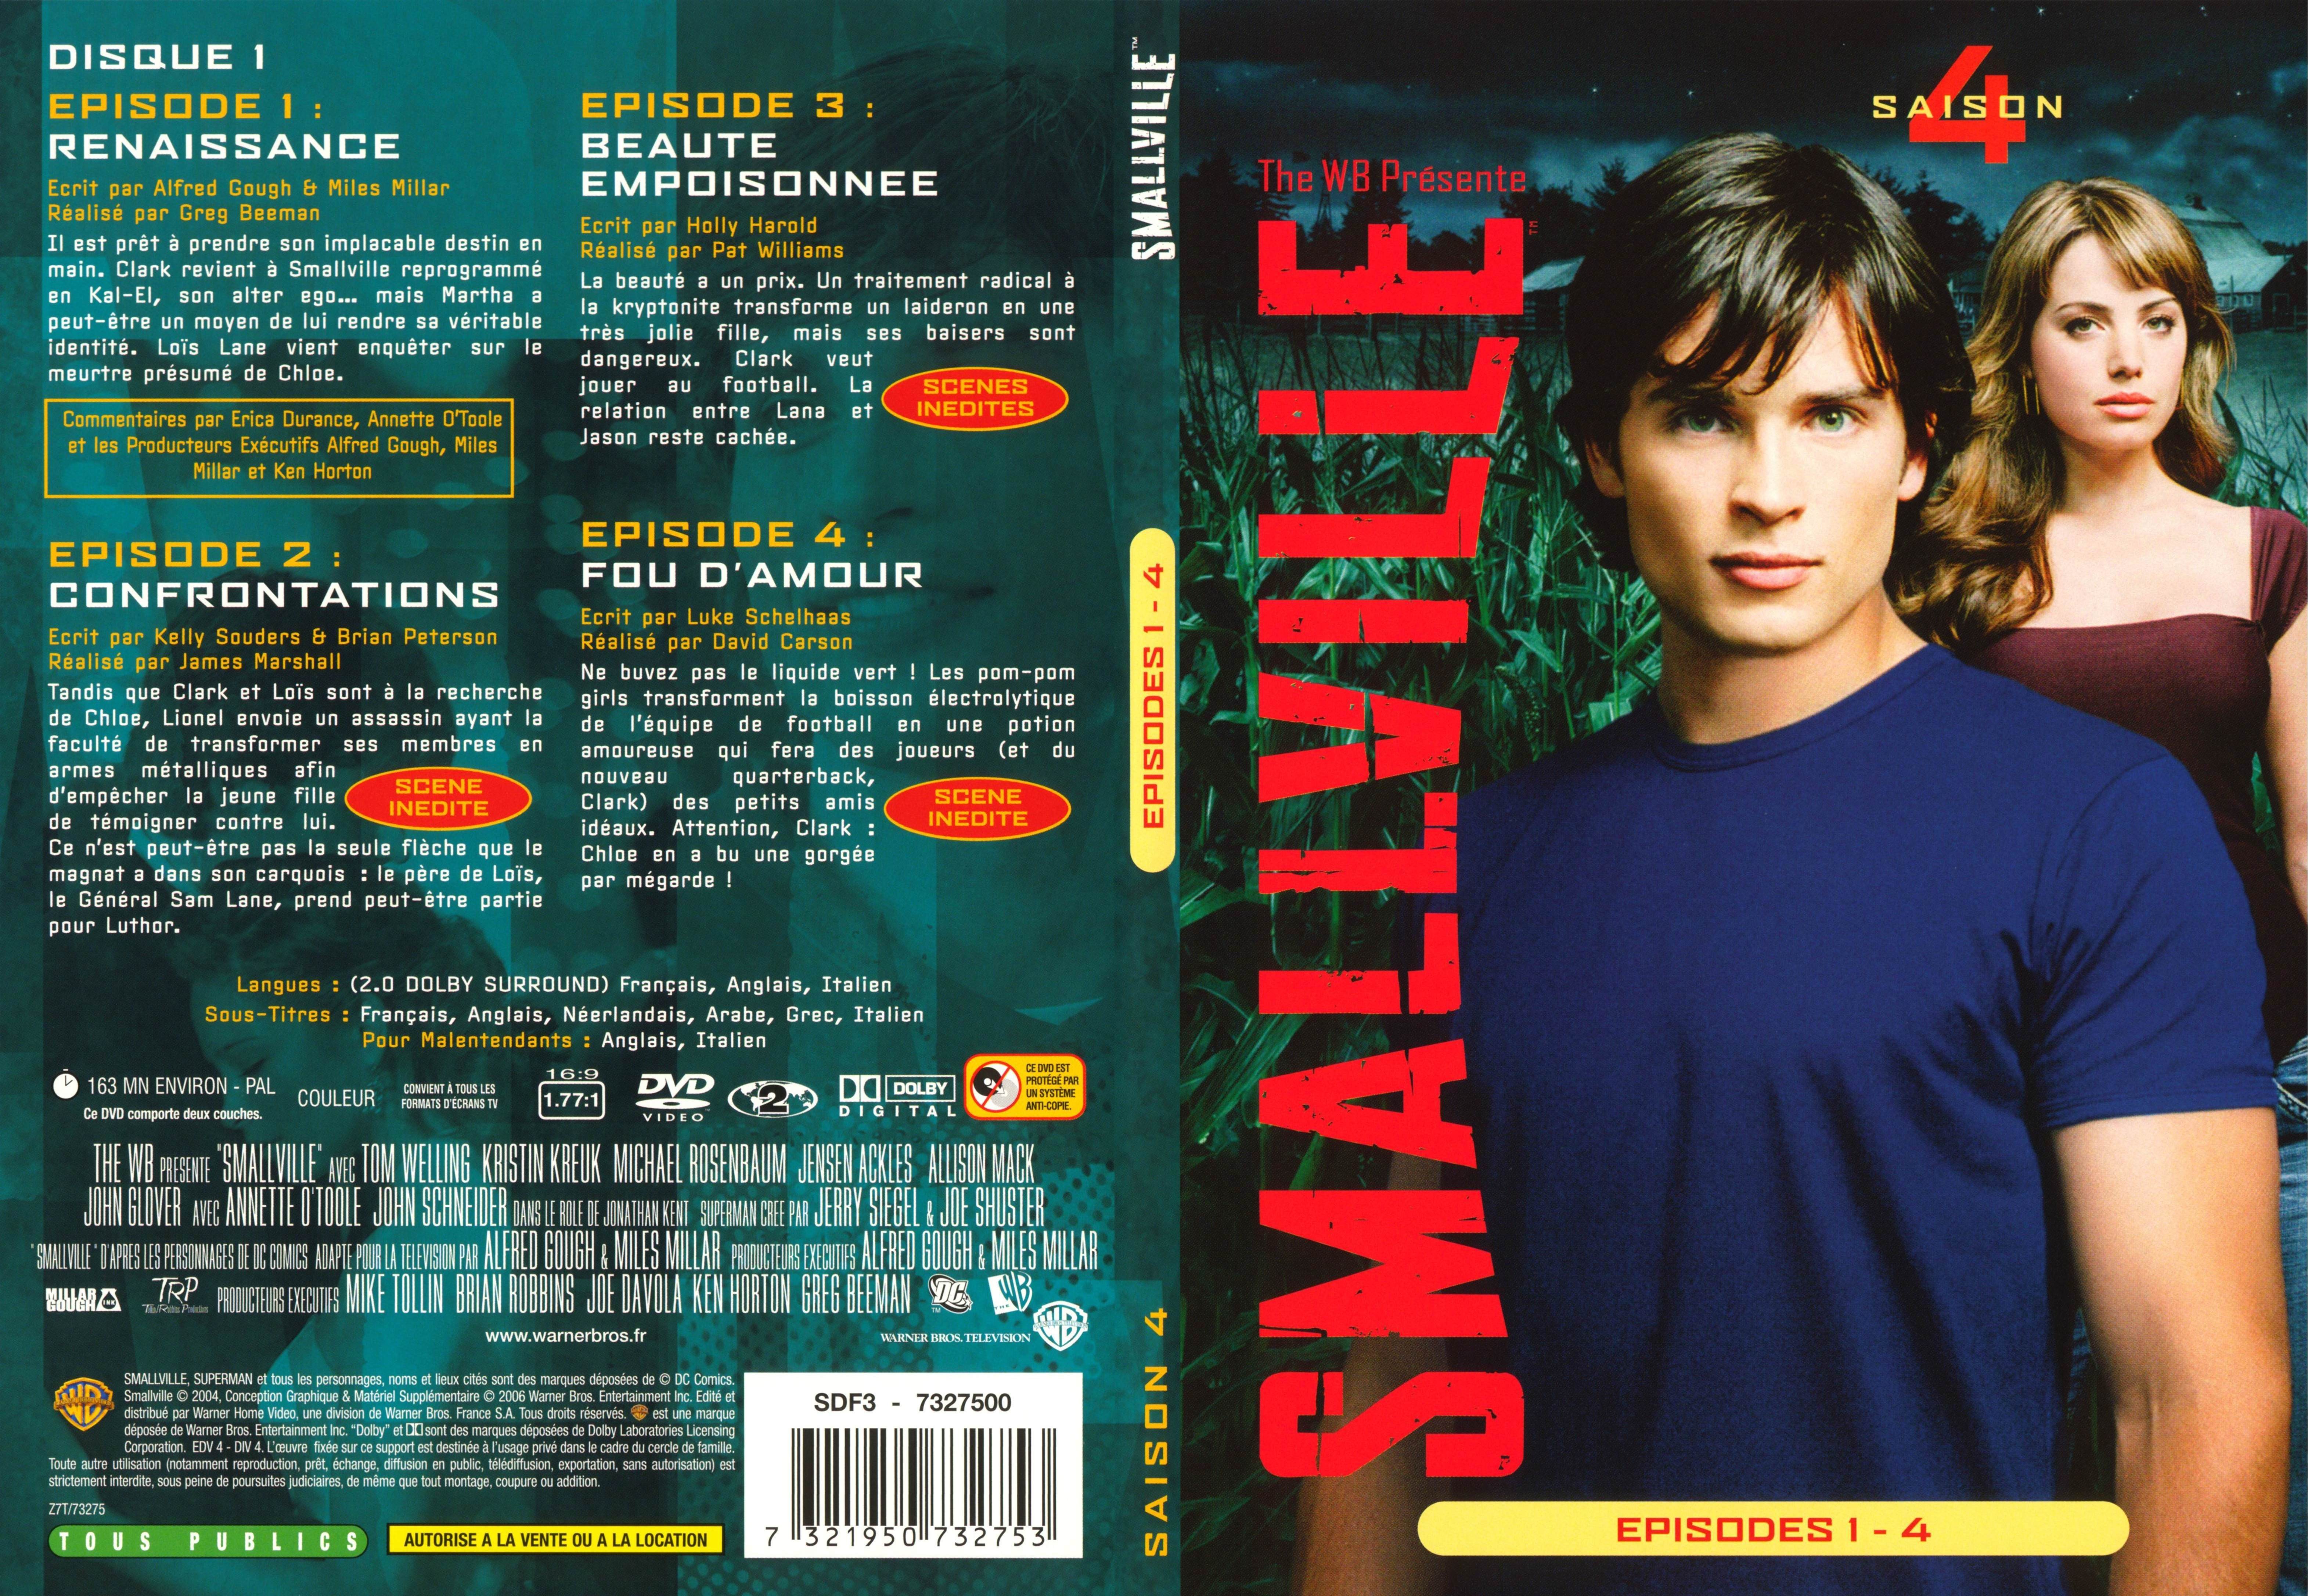 Jaquette DVD Smallville saison 4 DVD 1